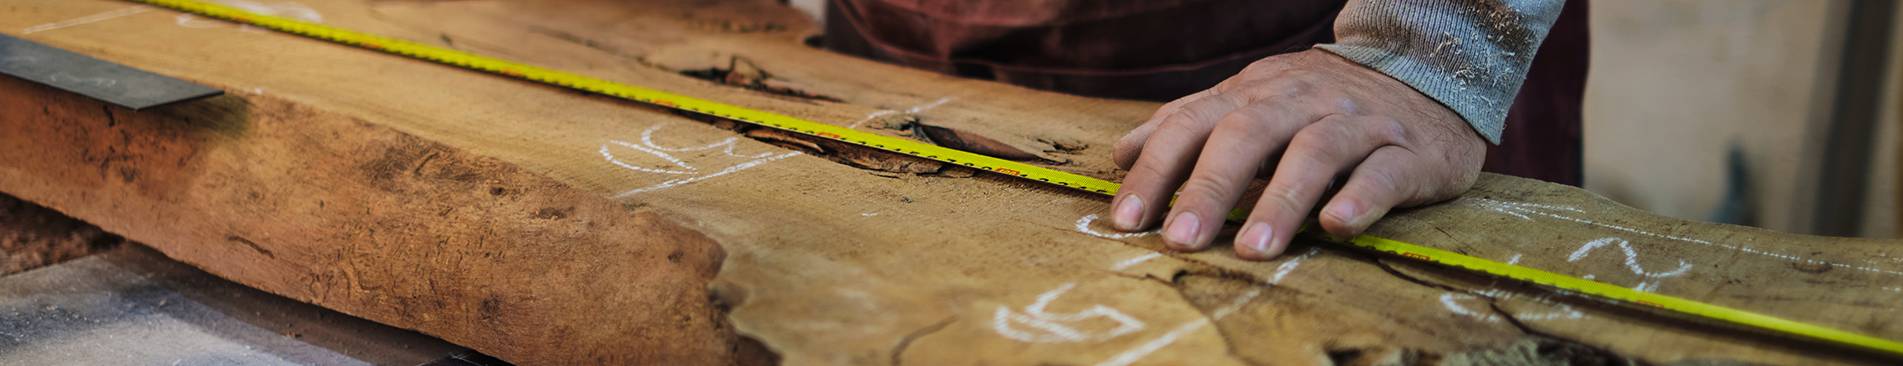 measuring wood slab